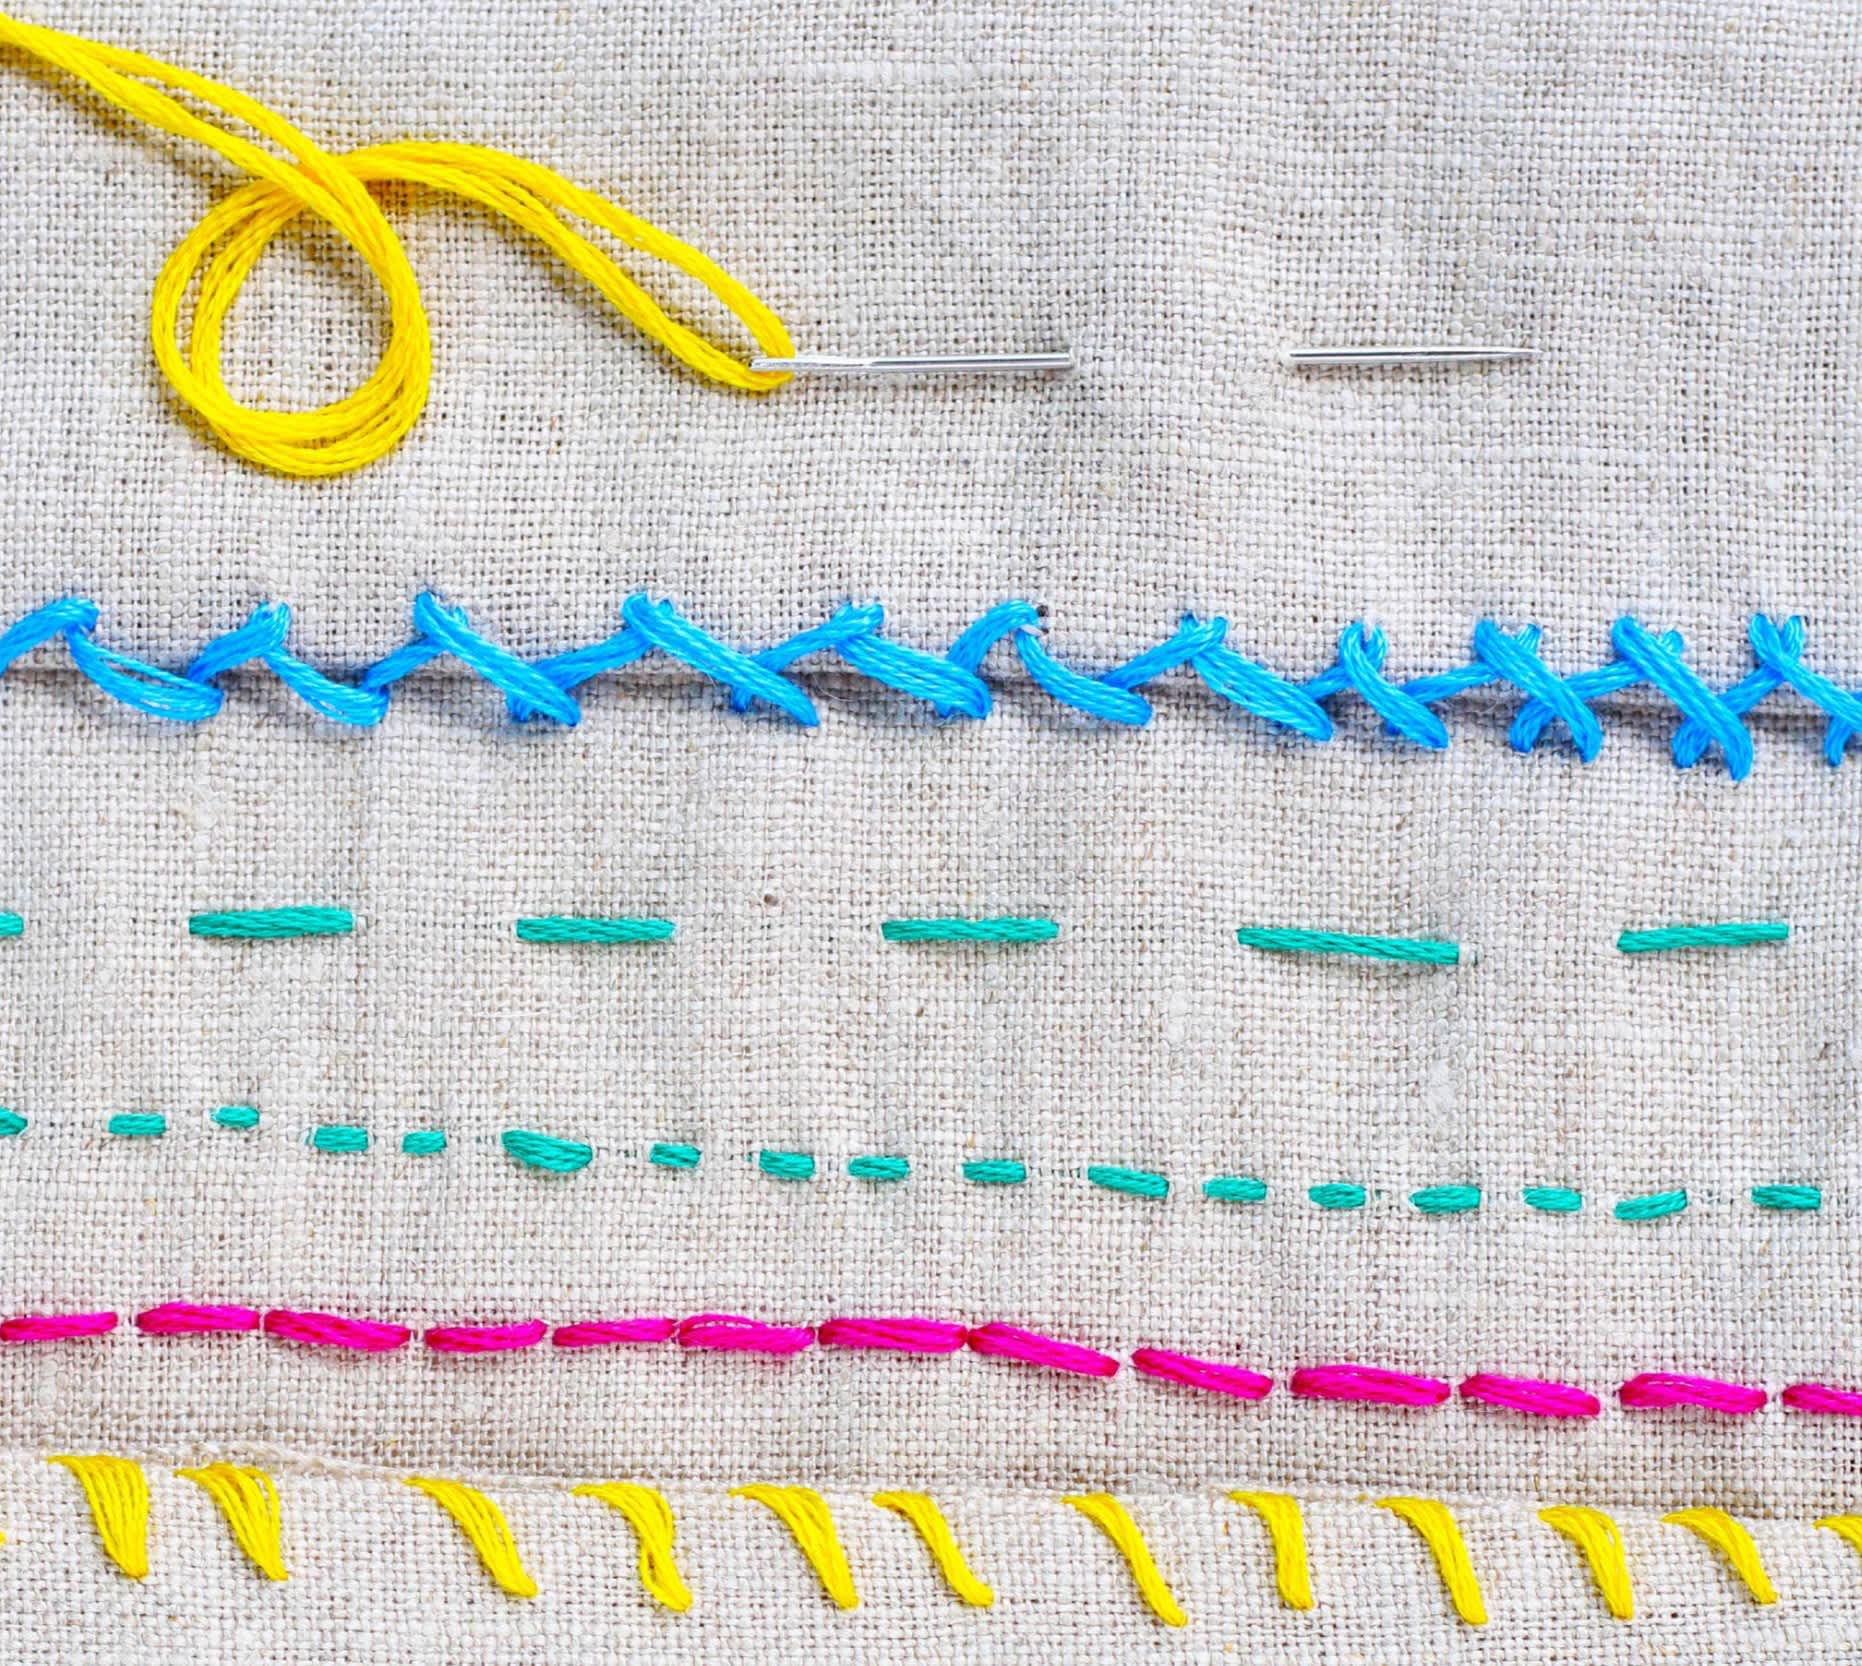 How to Sew Basic Stitches: 6 Stitch Photo Tutorials